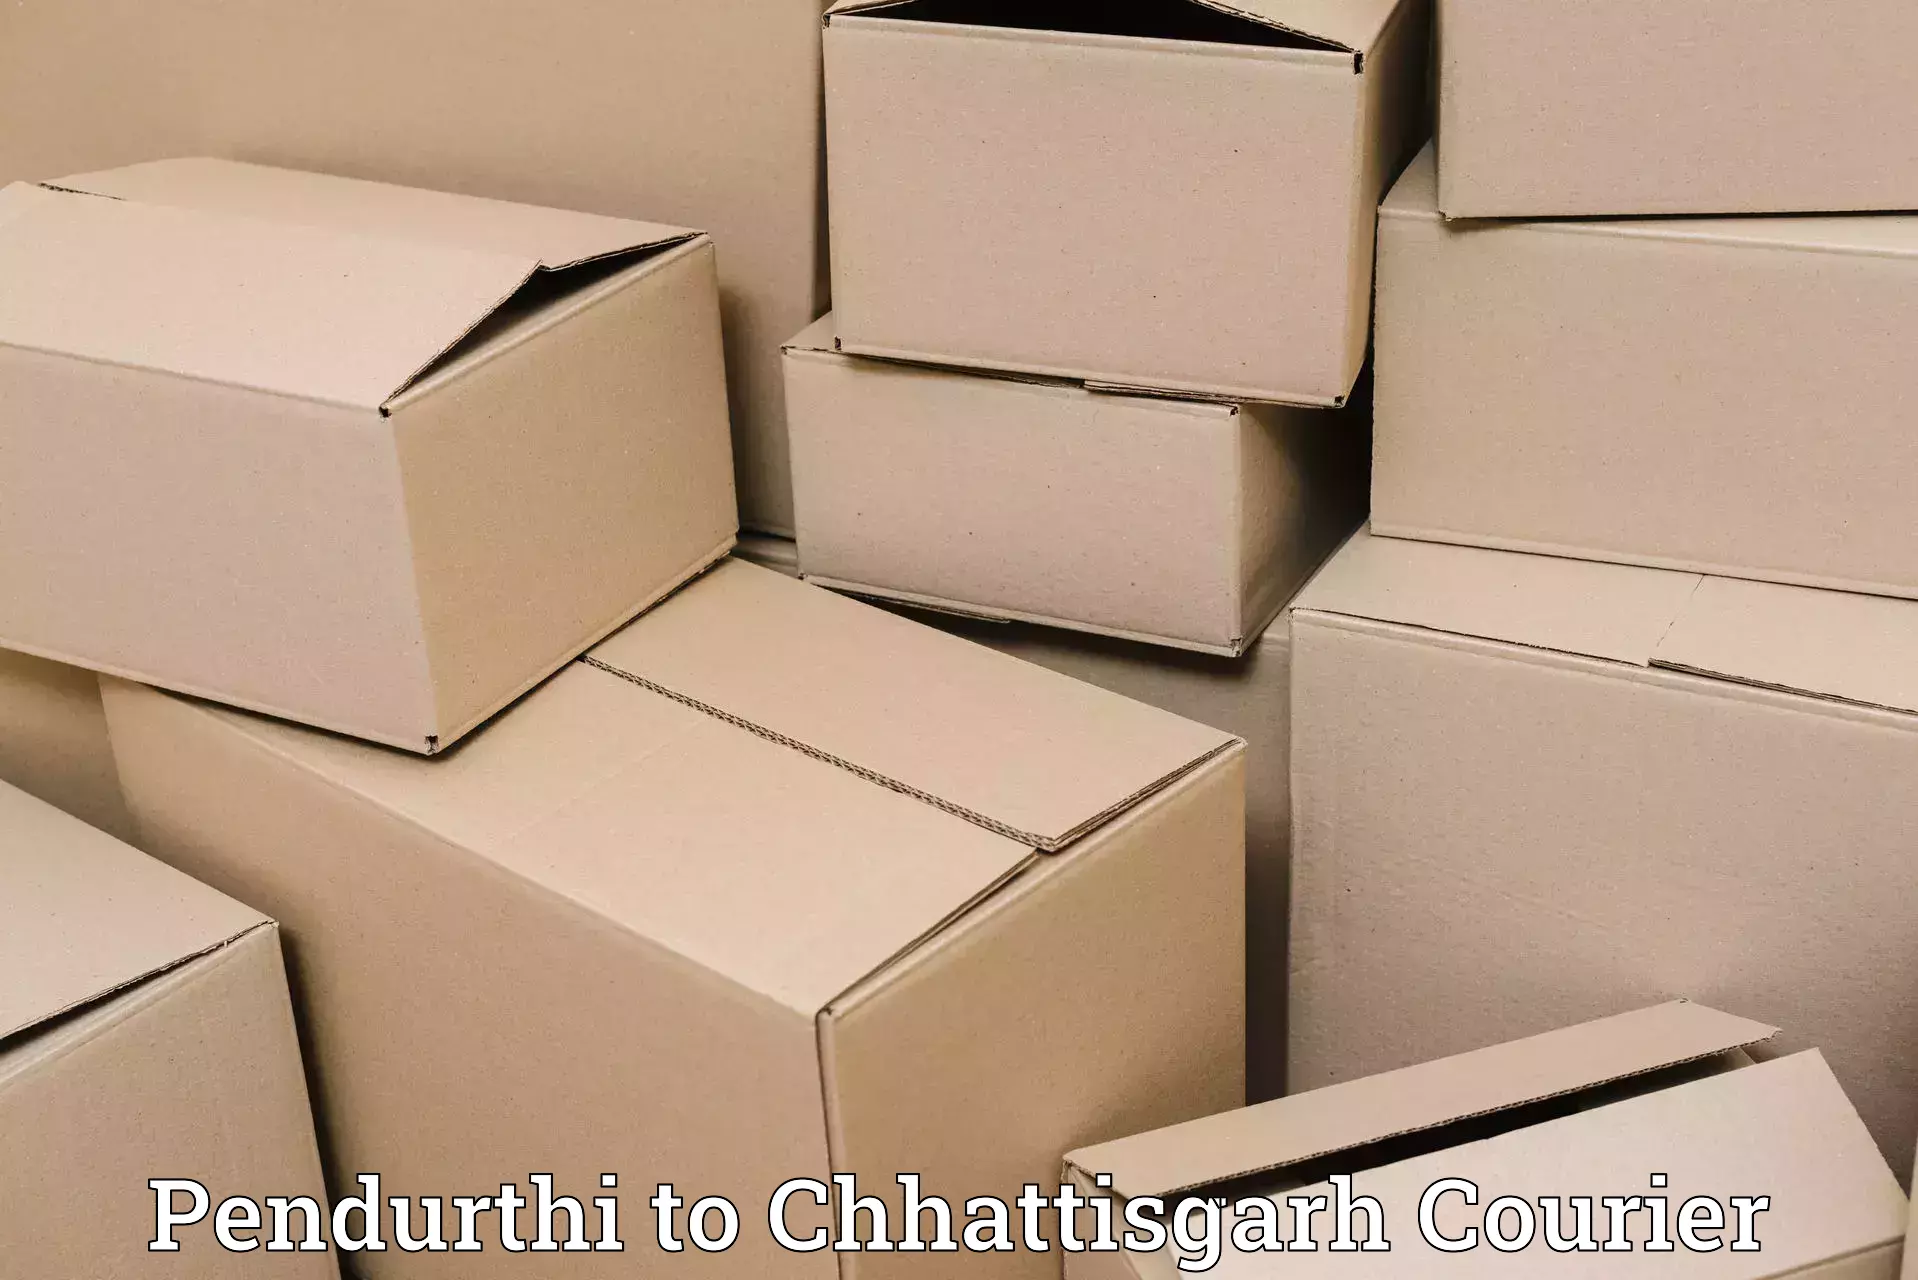 International parcel service Pendurthi to Korea Chhattisgarh